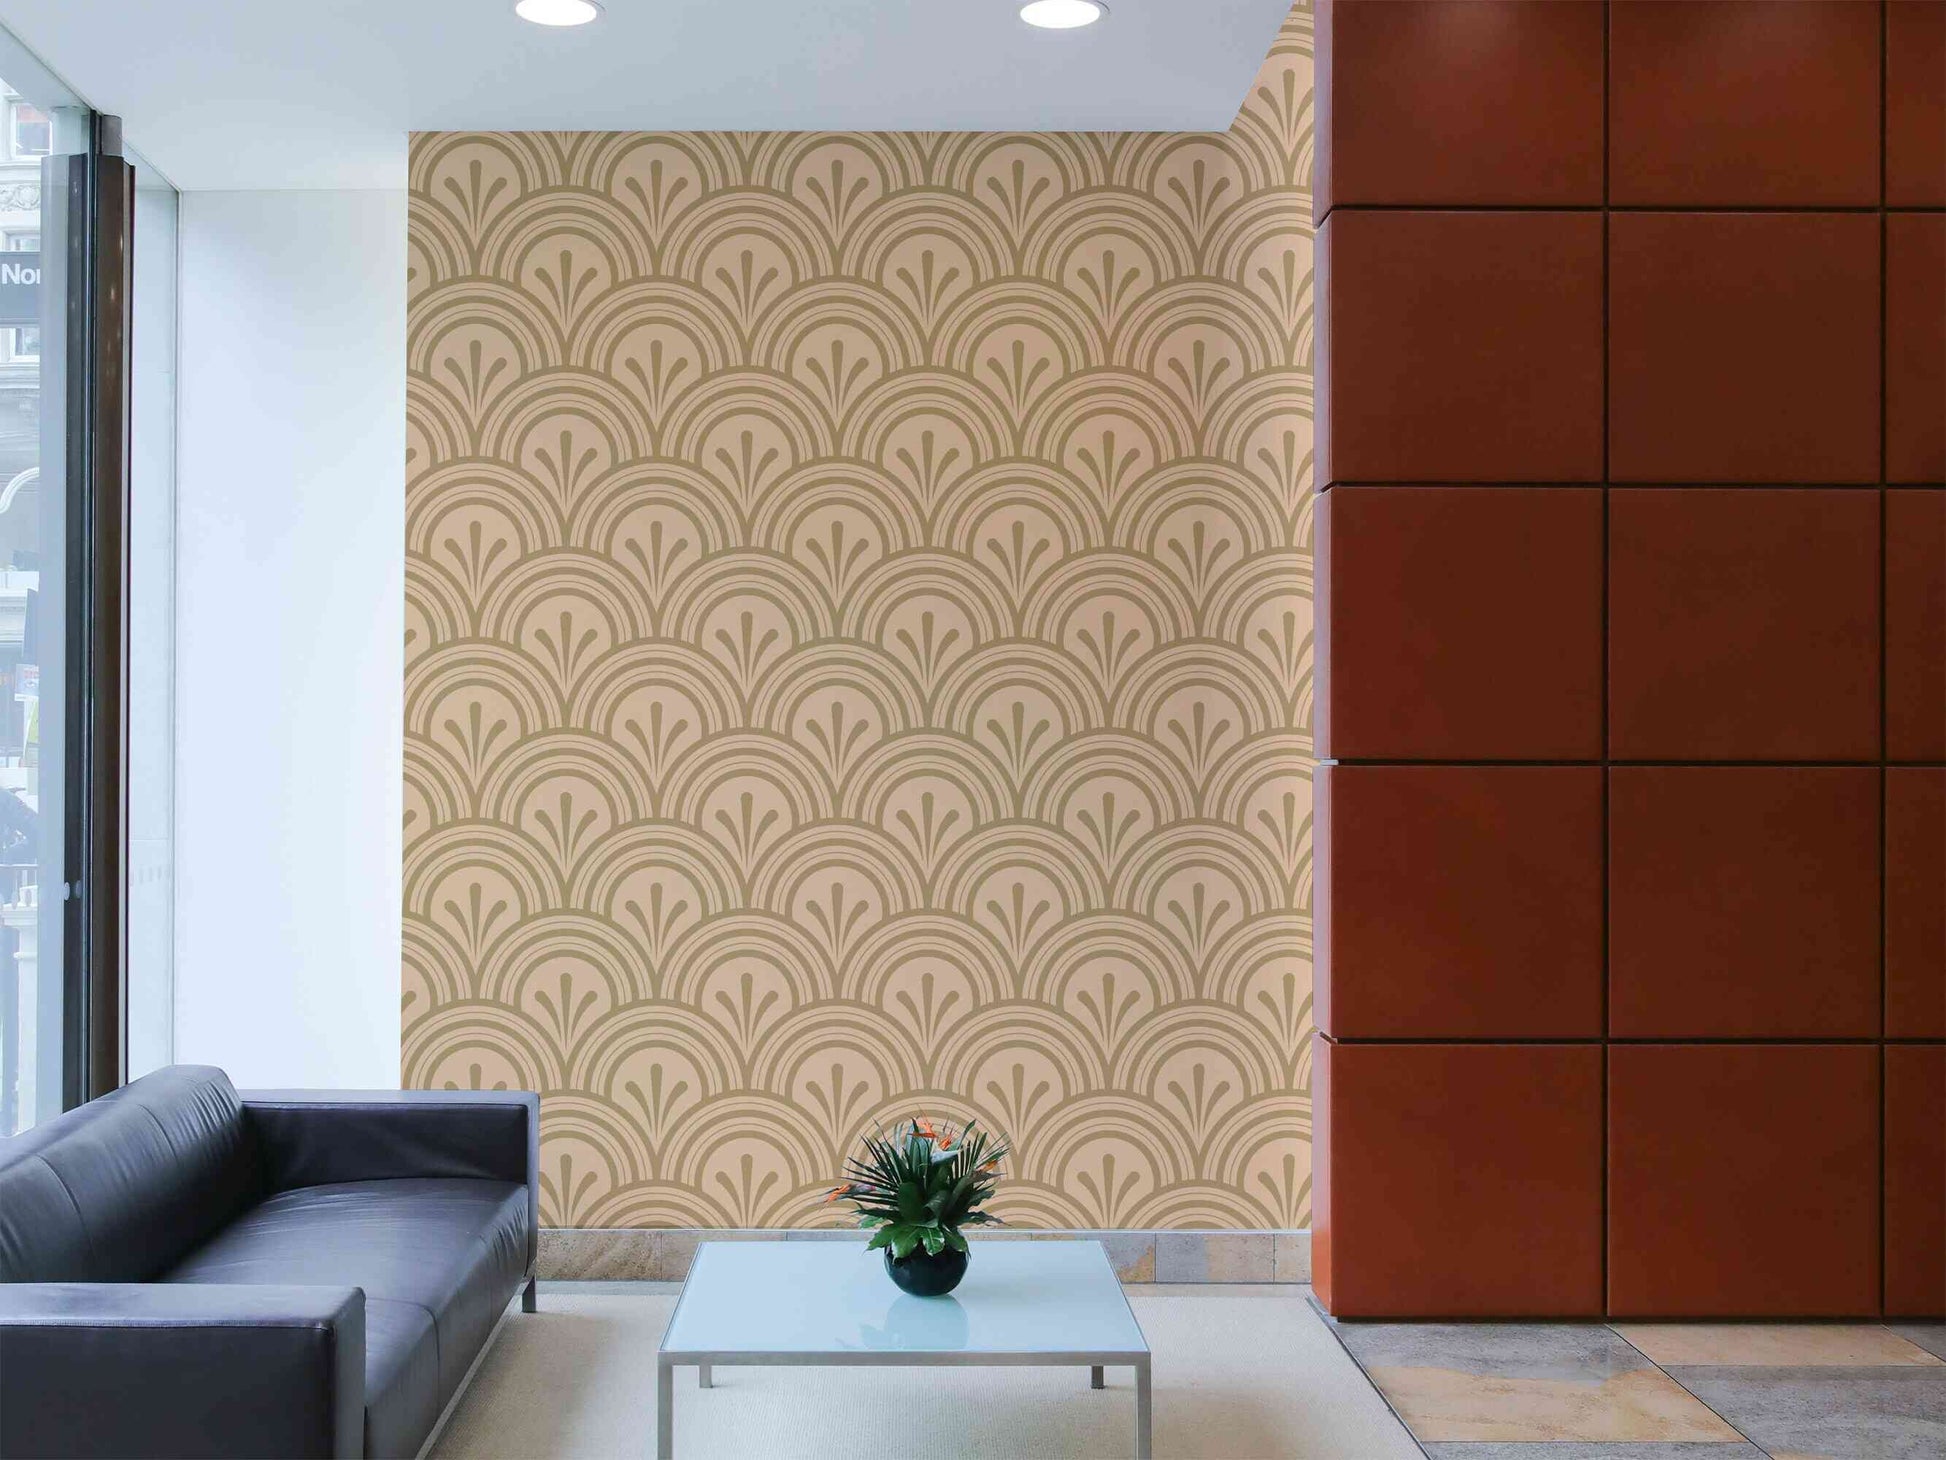 Elegant pattern mural wallpaper, perfect for dramatizing your interior design.